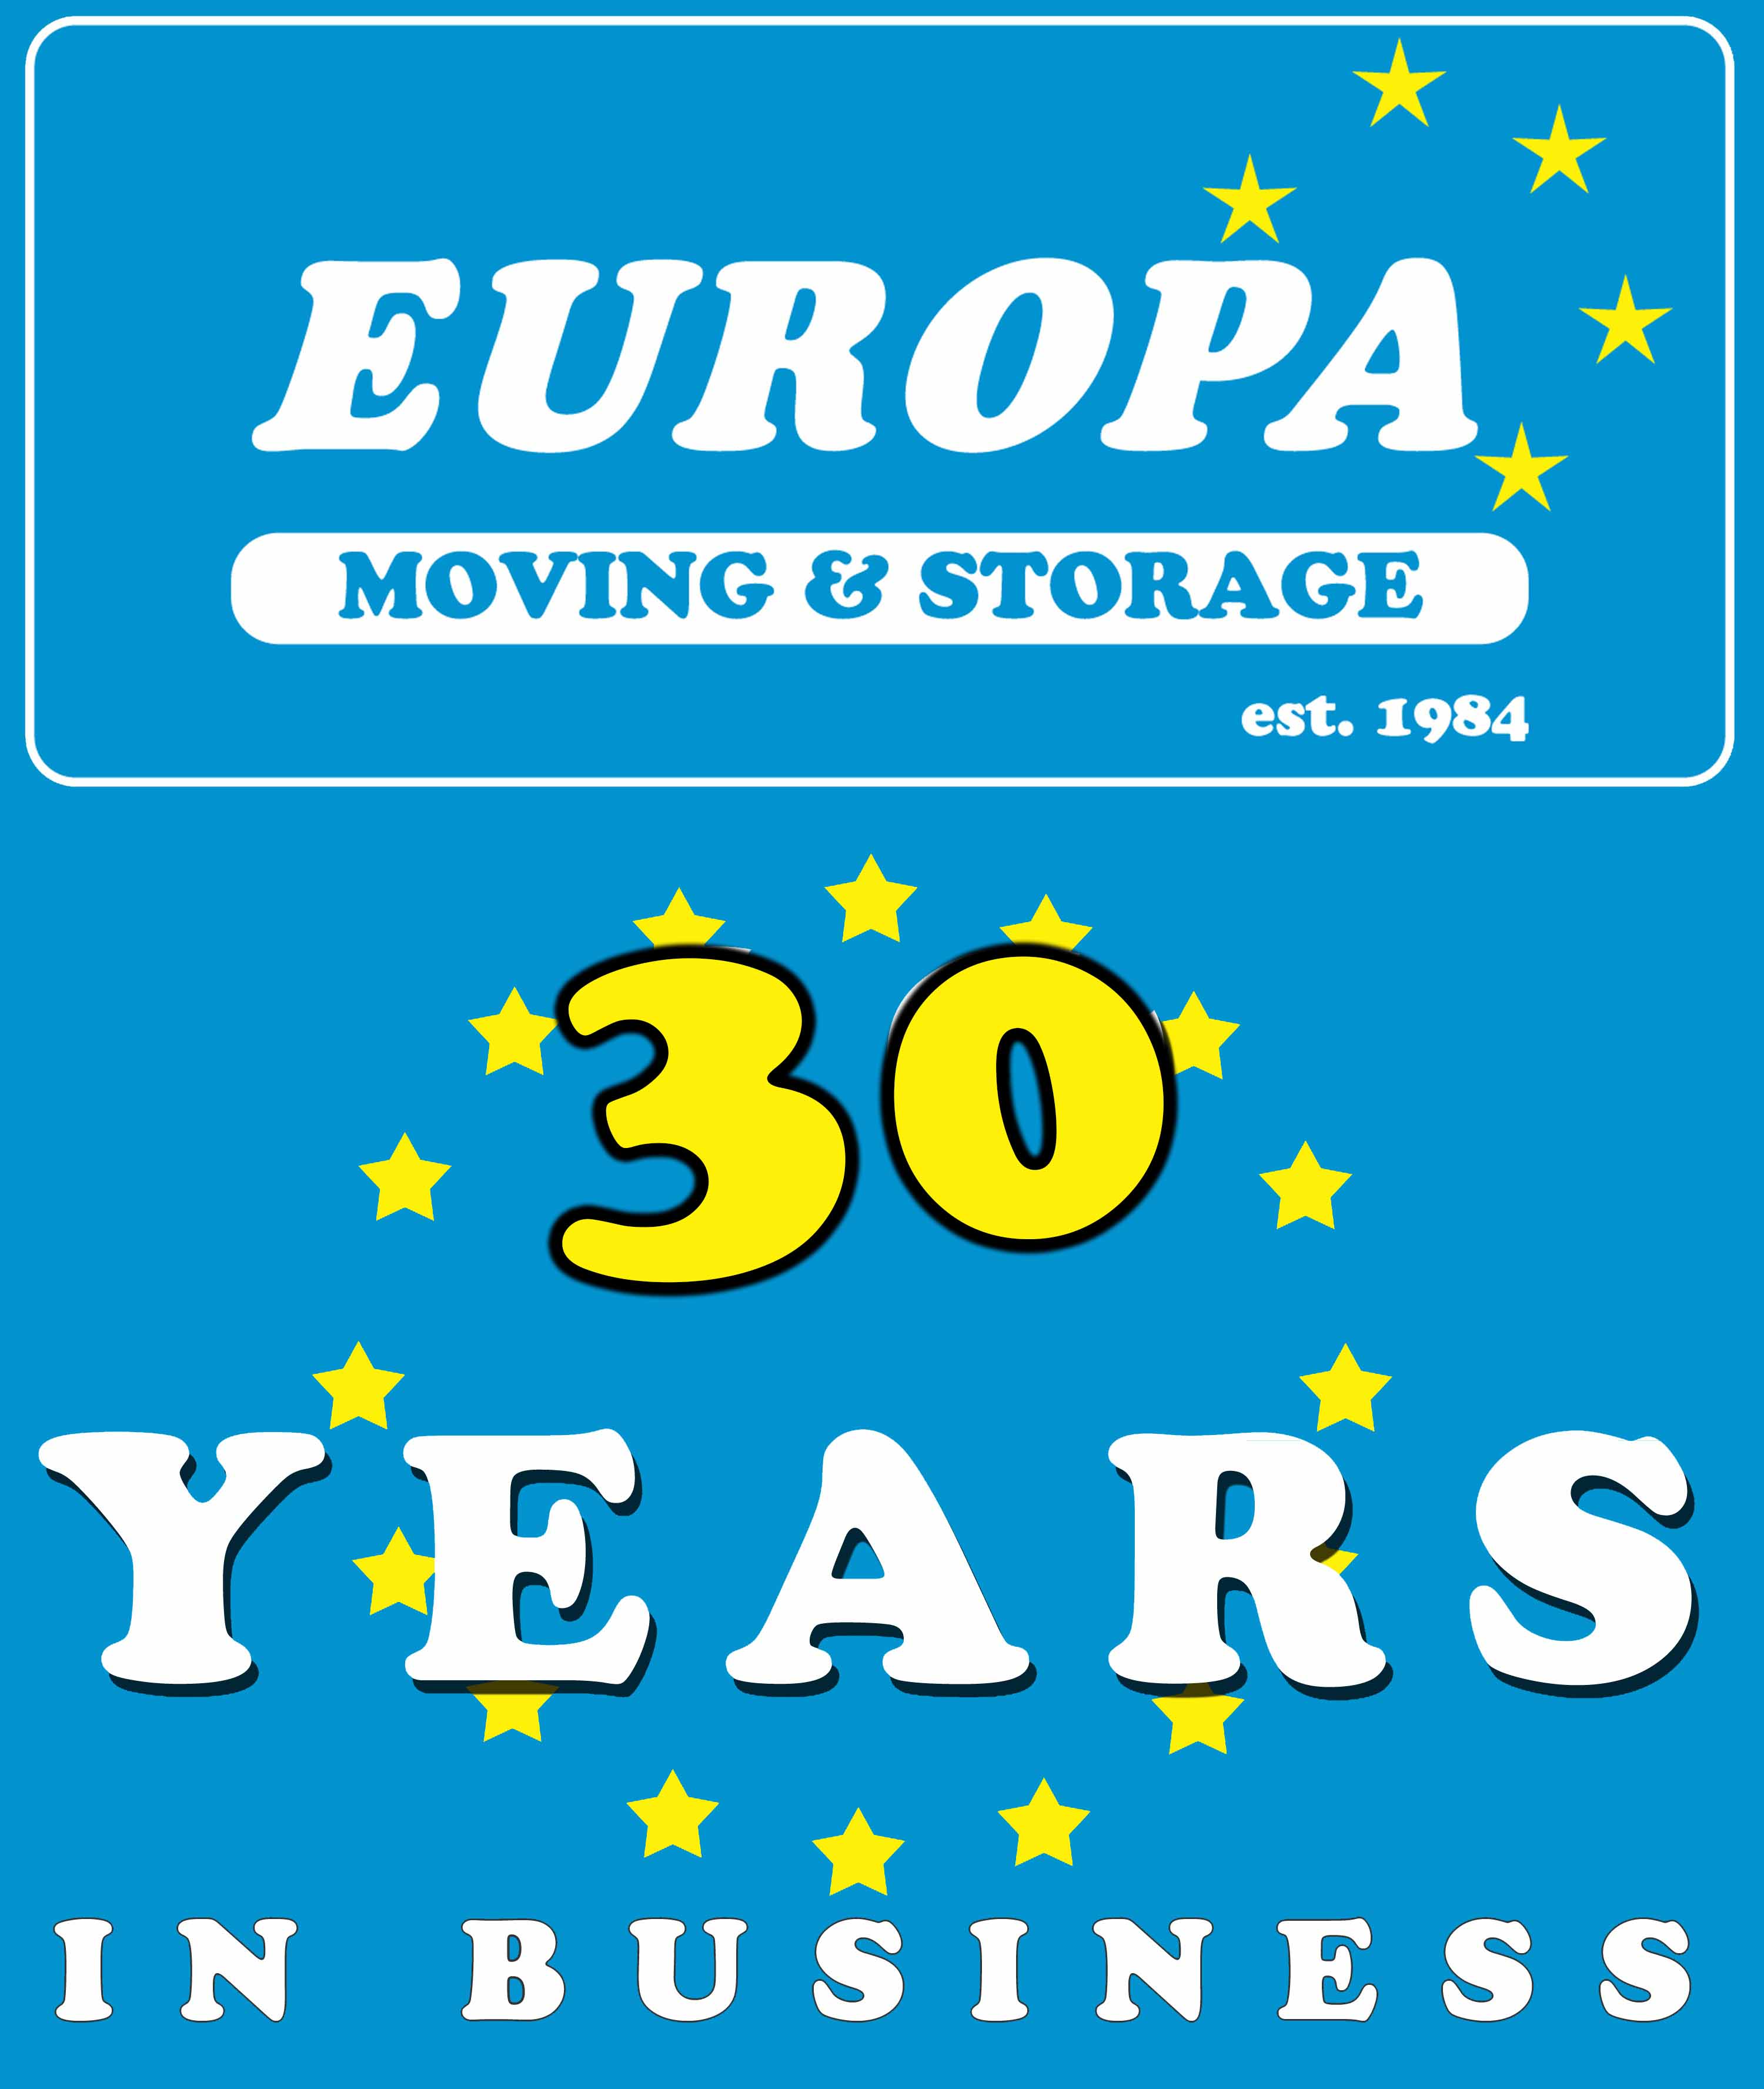 Europa Moving & Storage's logo